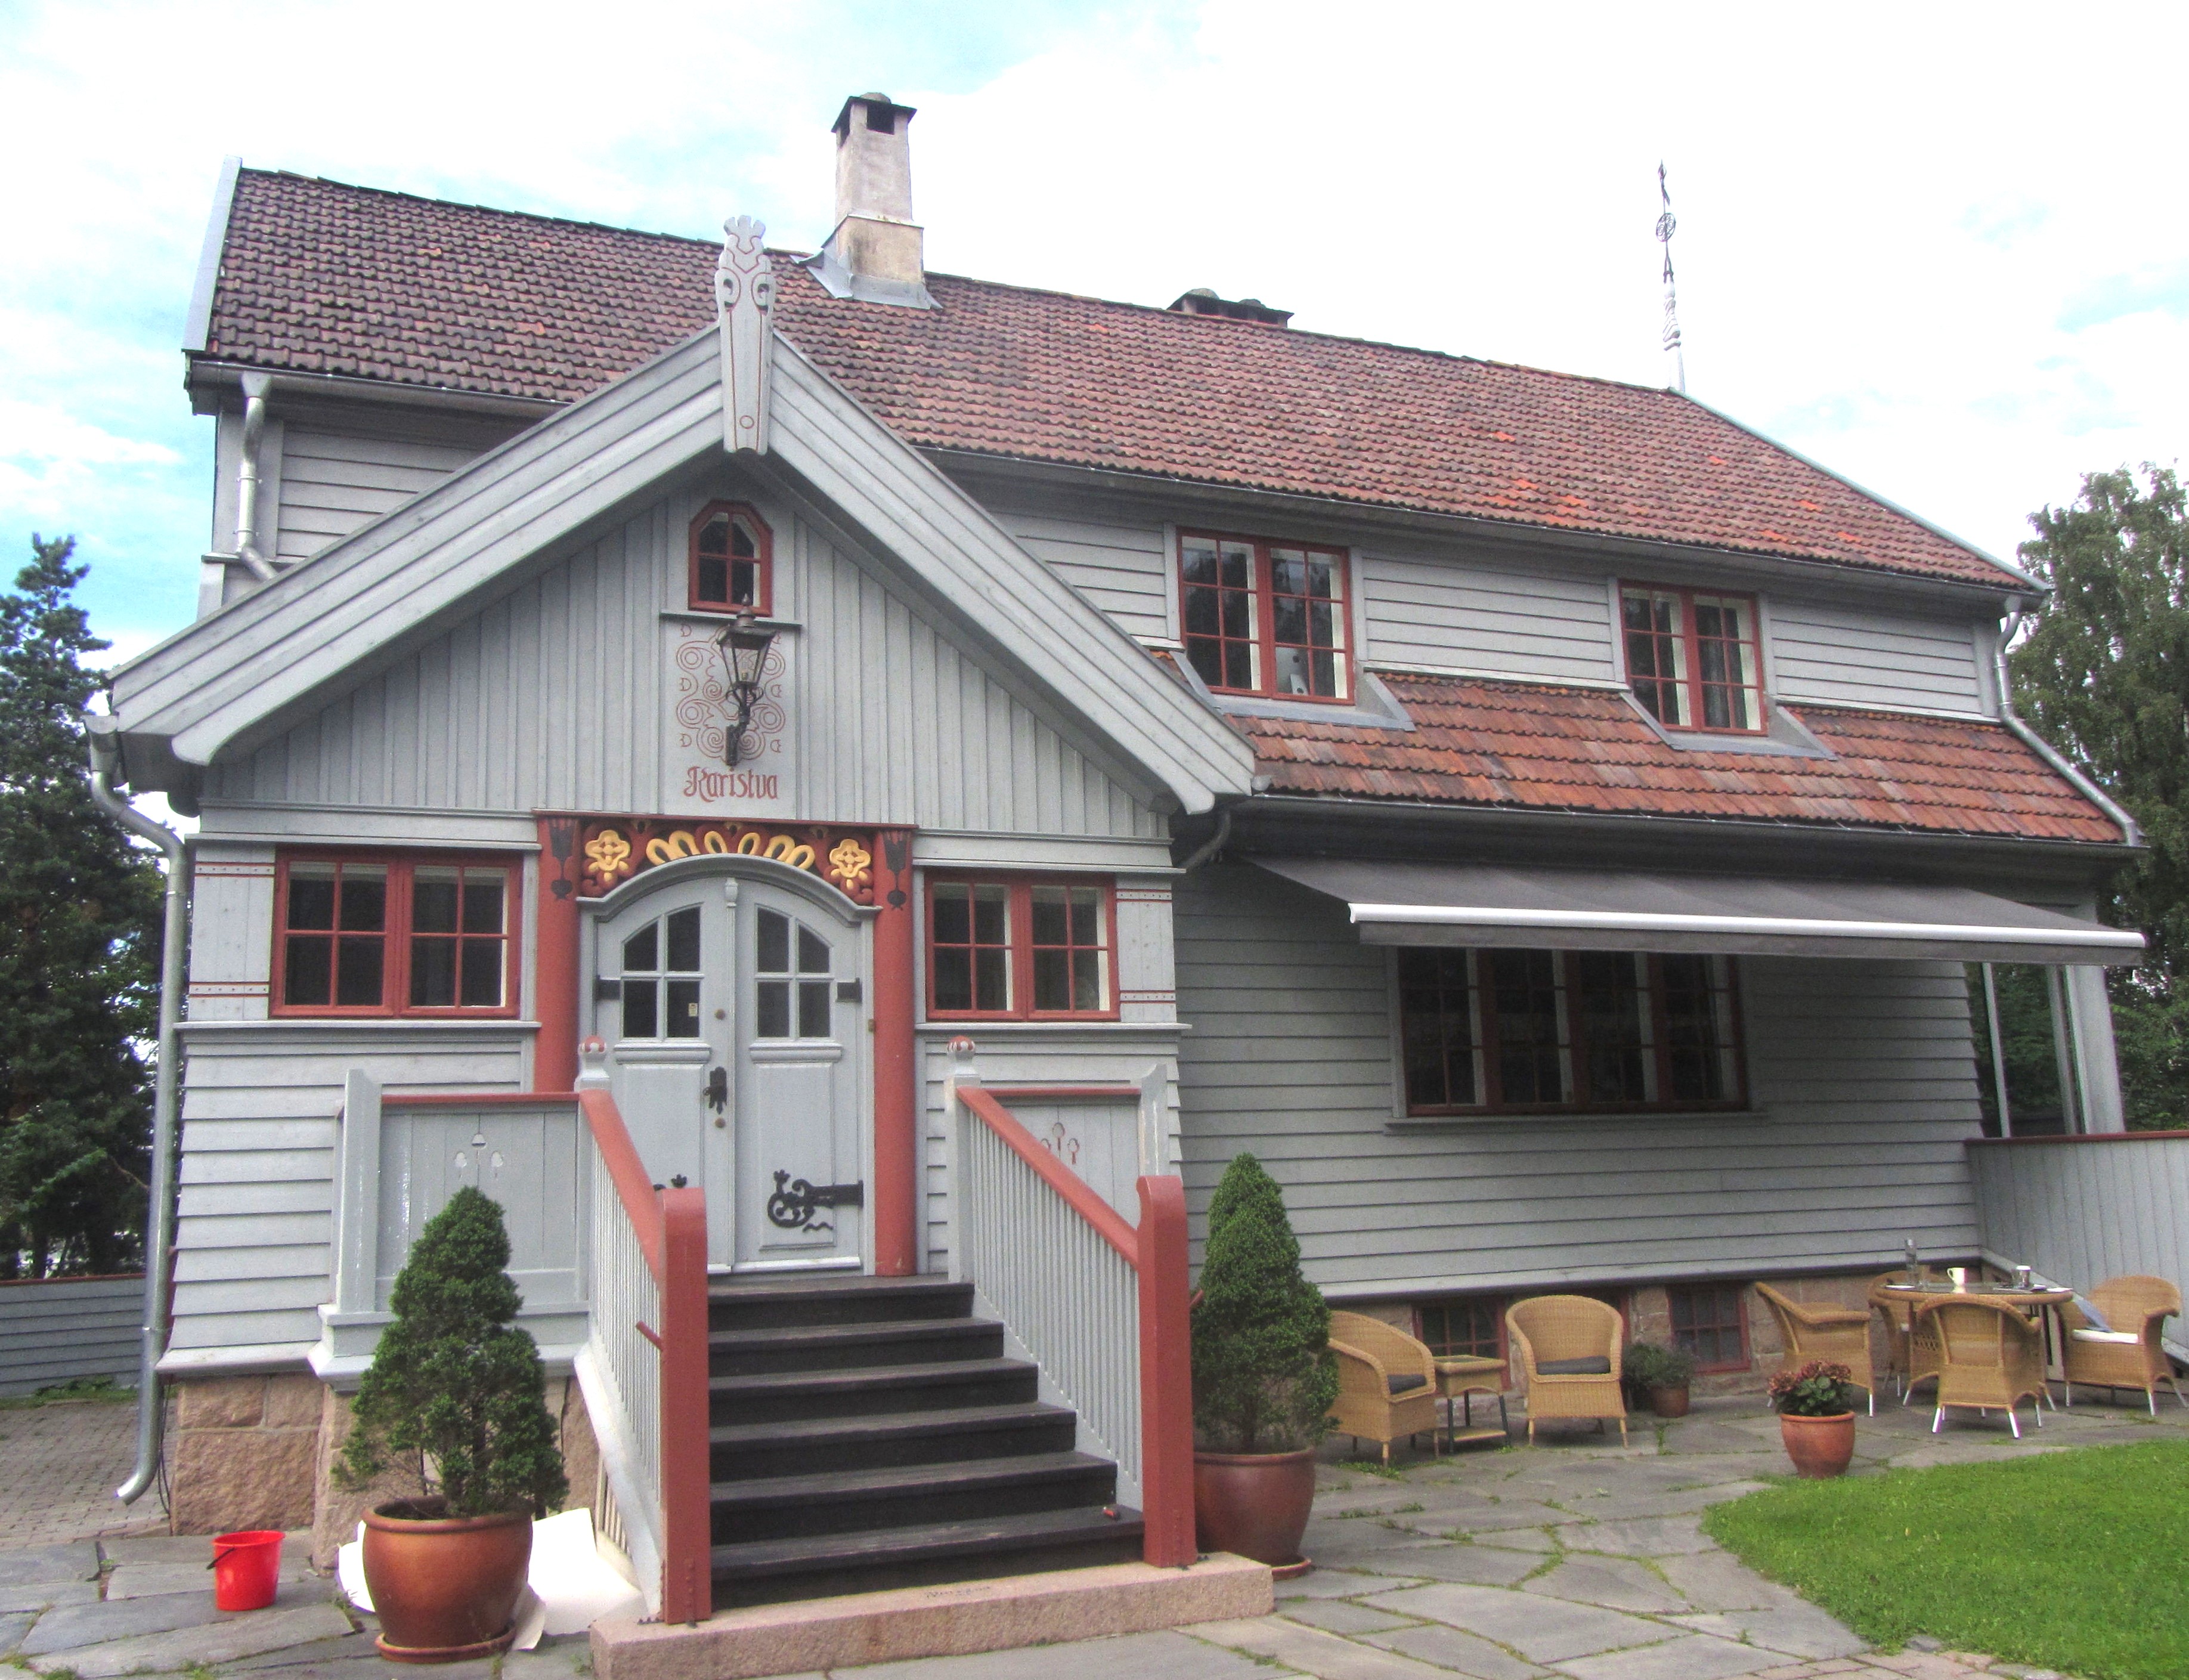 Karistua i Bærum 1910, Halvdan Kohts hjem.